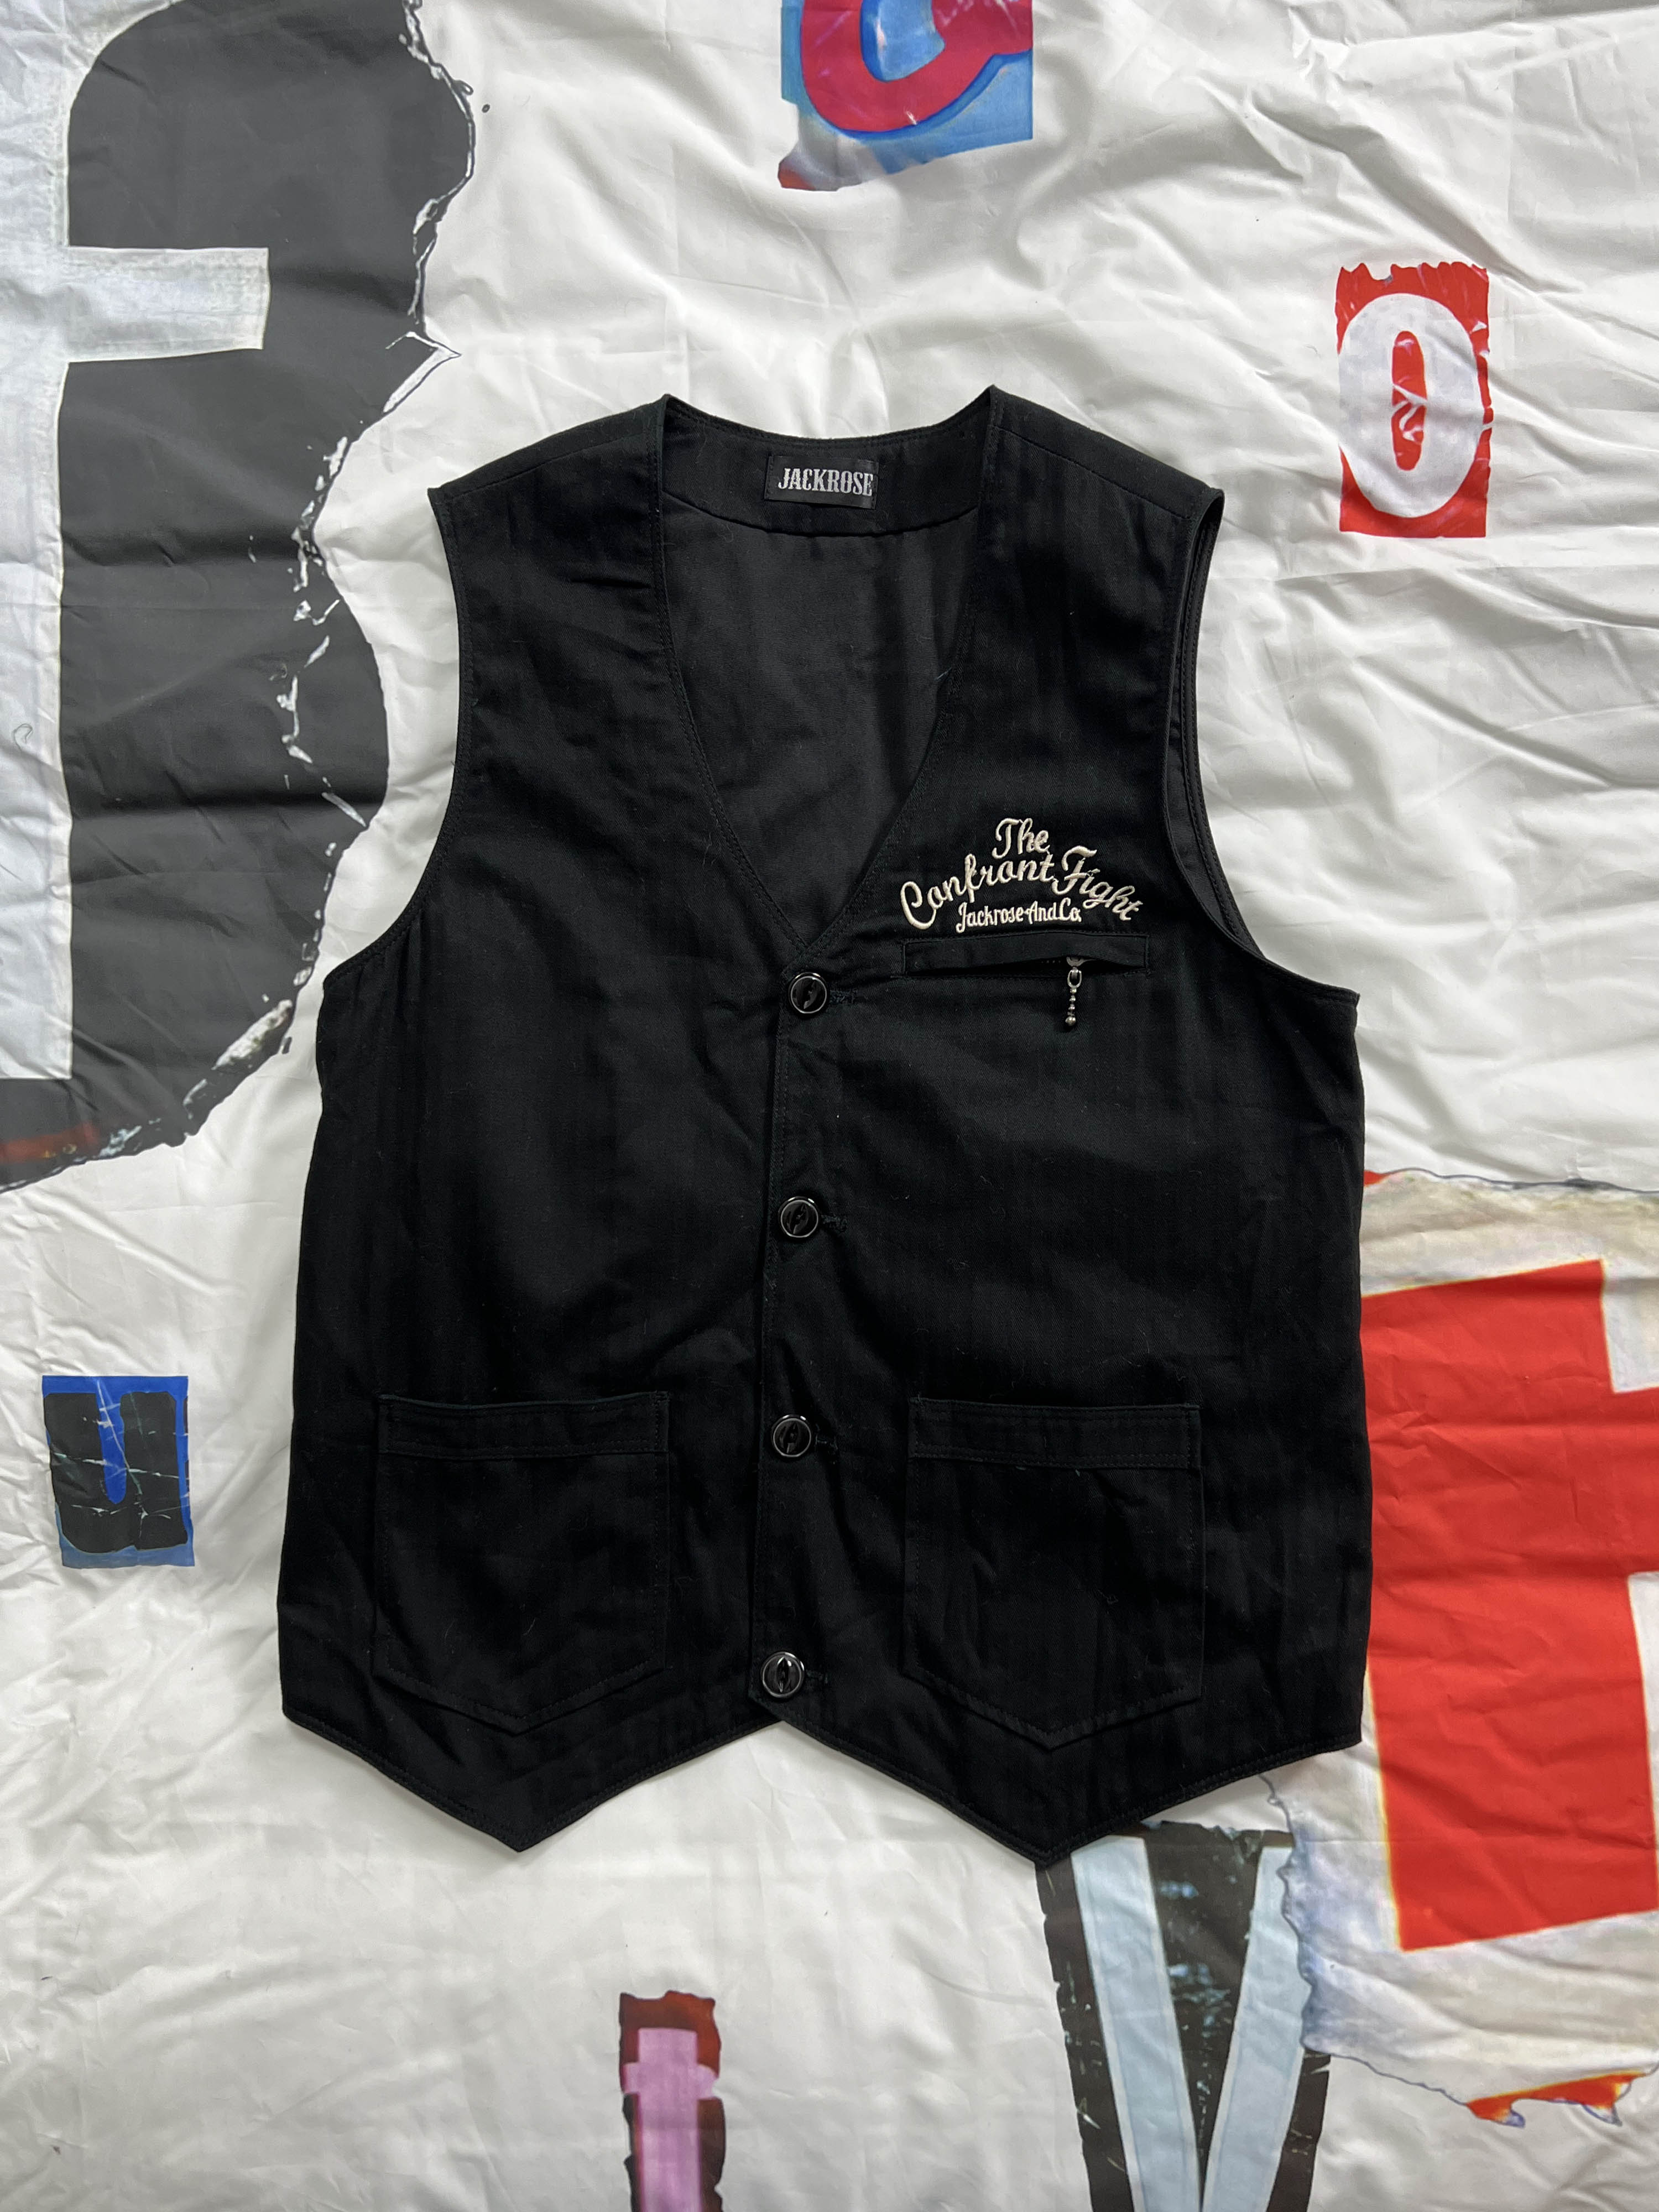 JACKROSE cotton vest